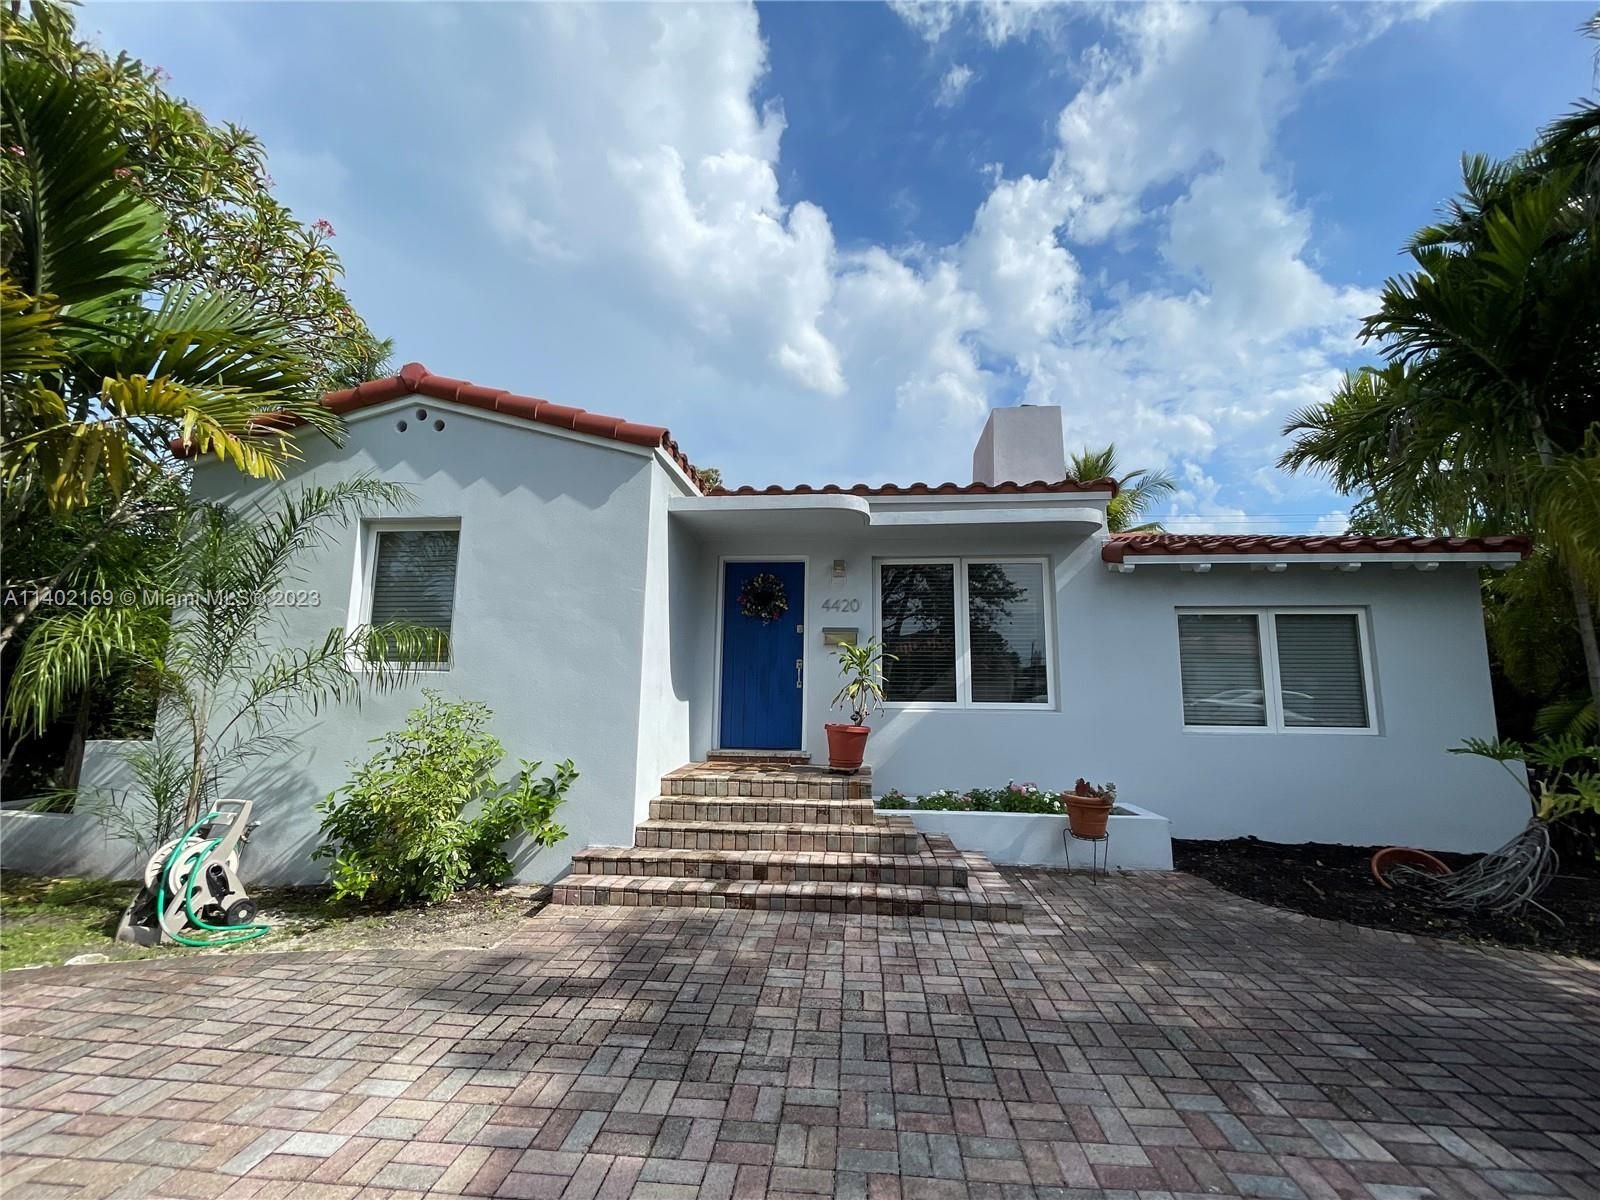 Real estate property located at 4420 14th St, Miami-Dade County, Miami, FL